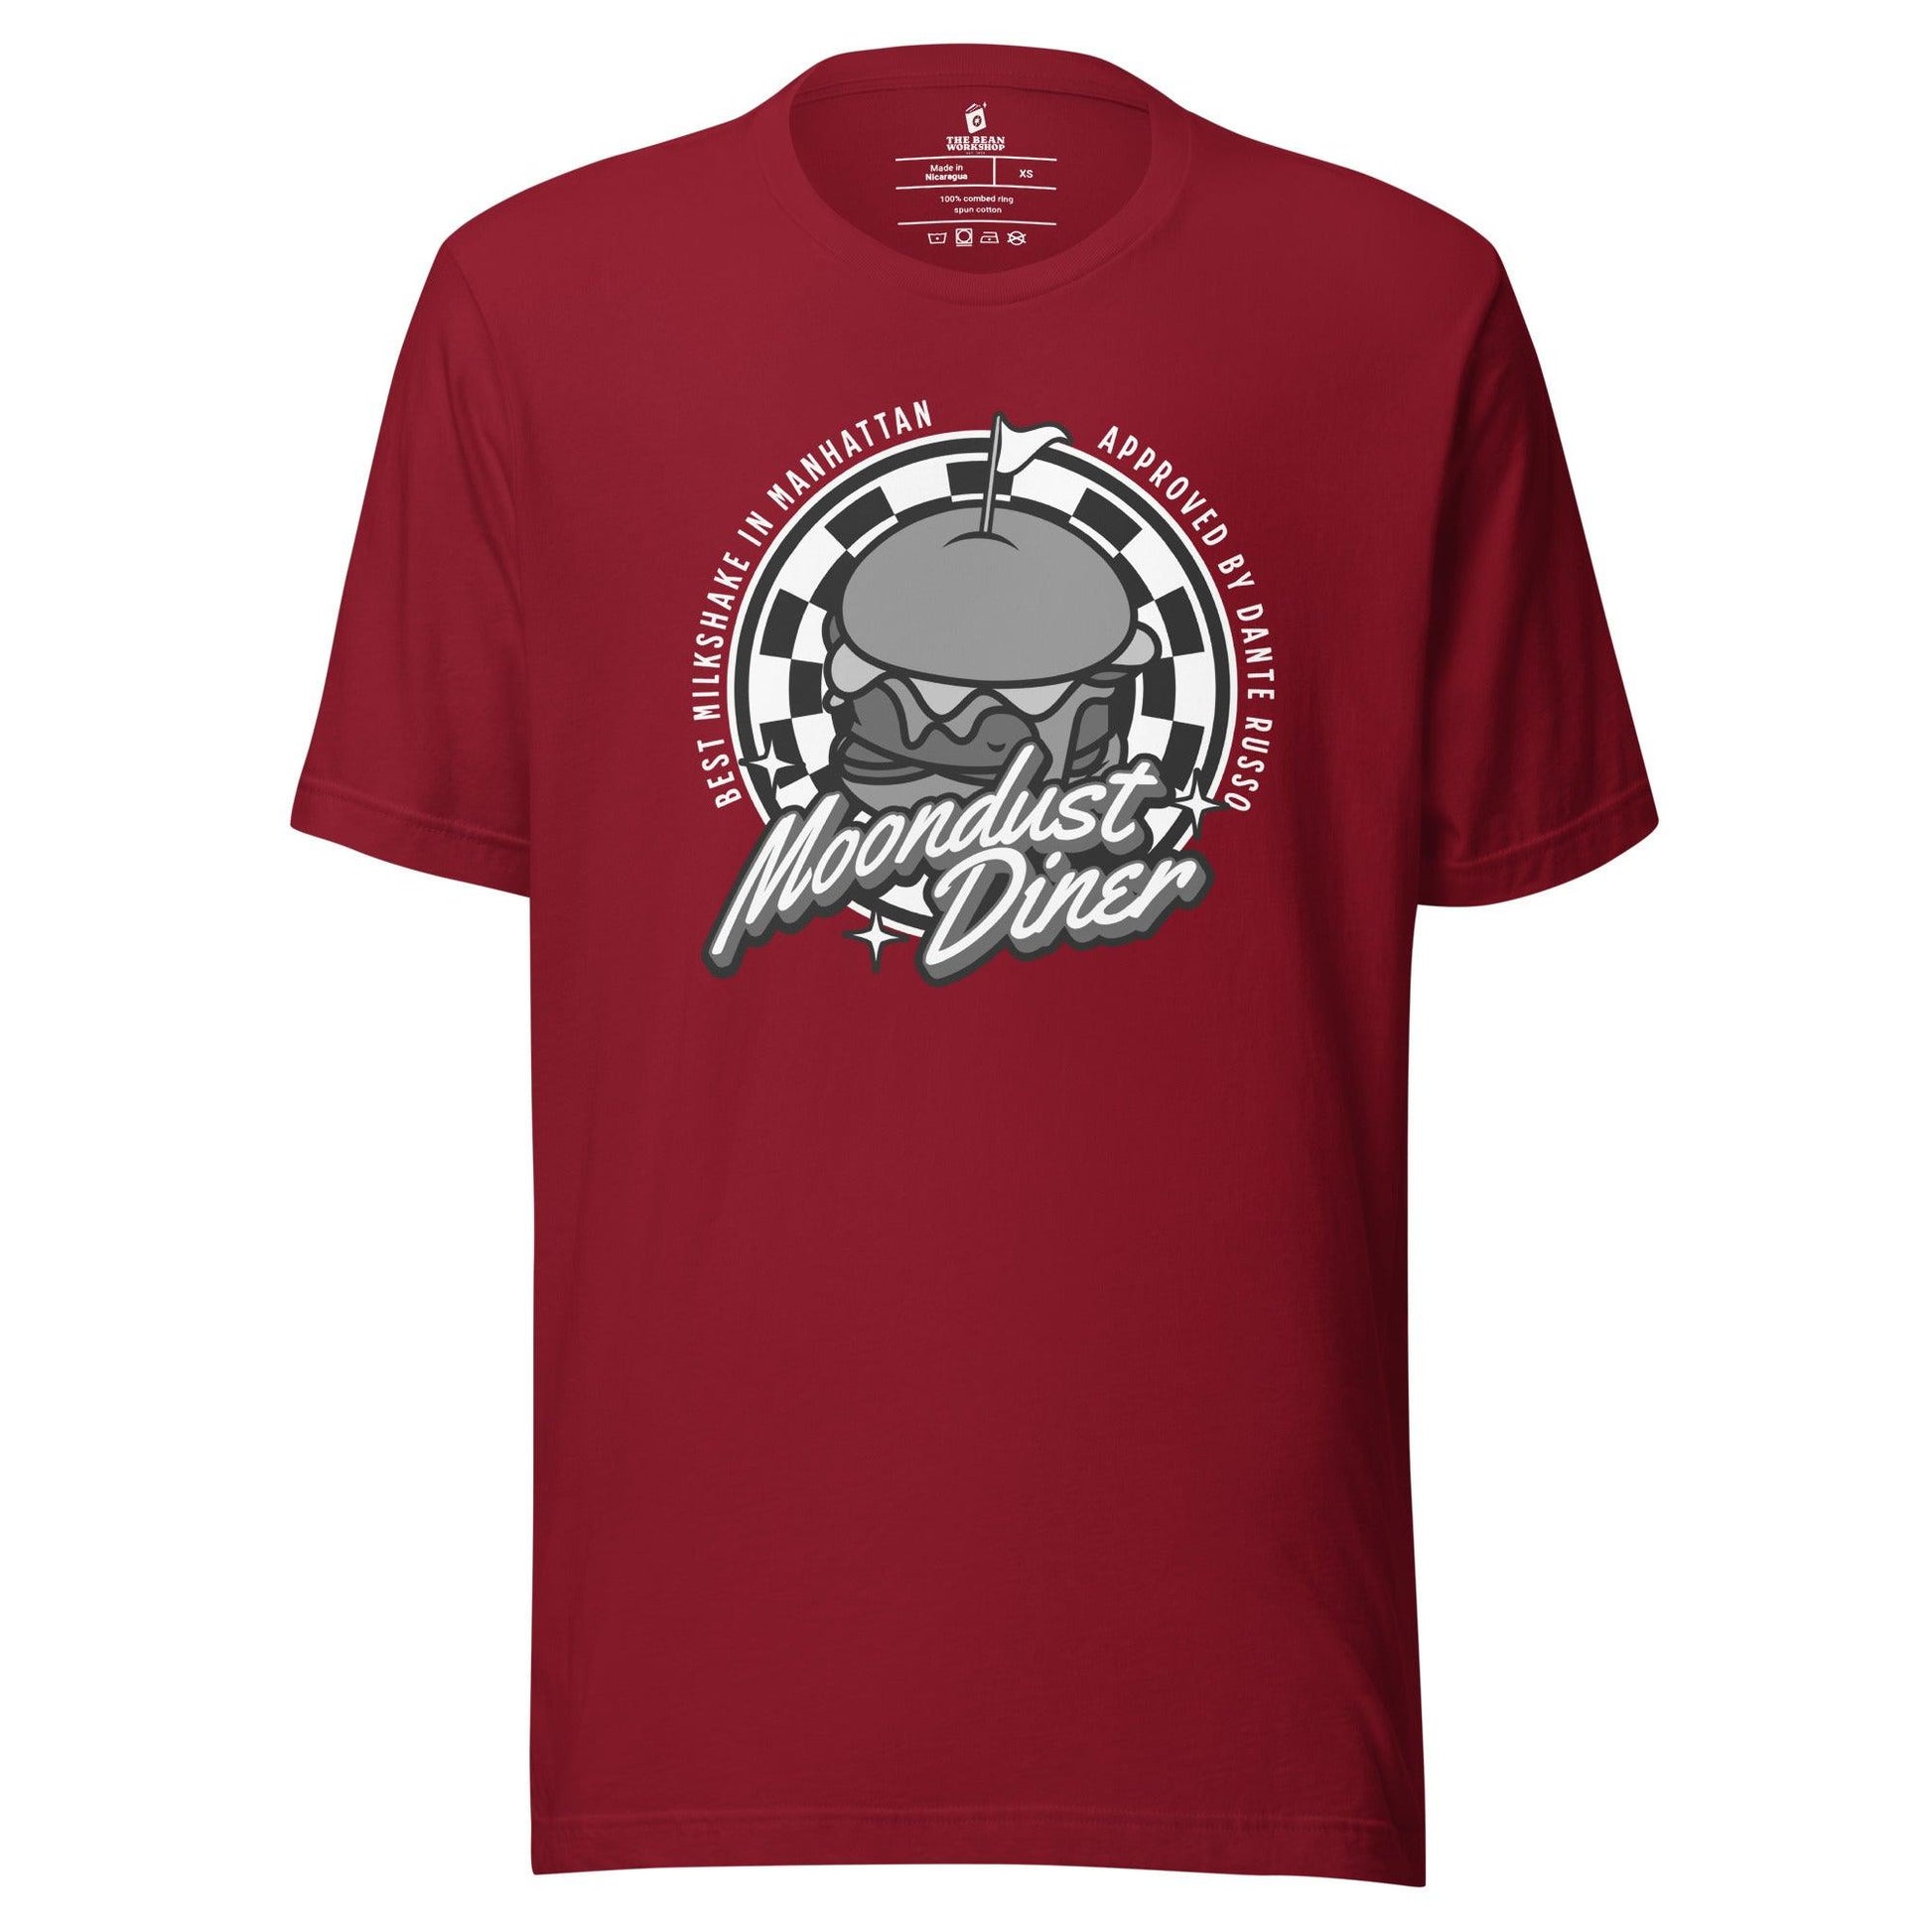 Moondust Diner T-Shirt - The Bean Workshop - ana huang, dante russo, kings of sin, retro, t-shirt